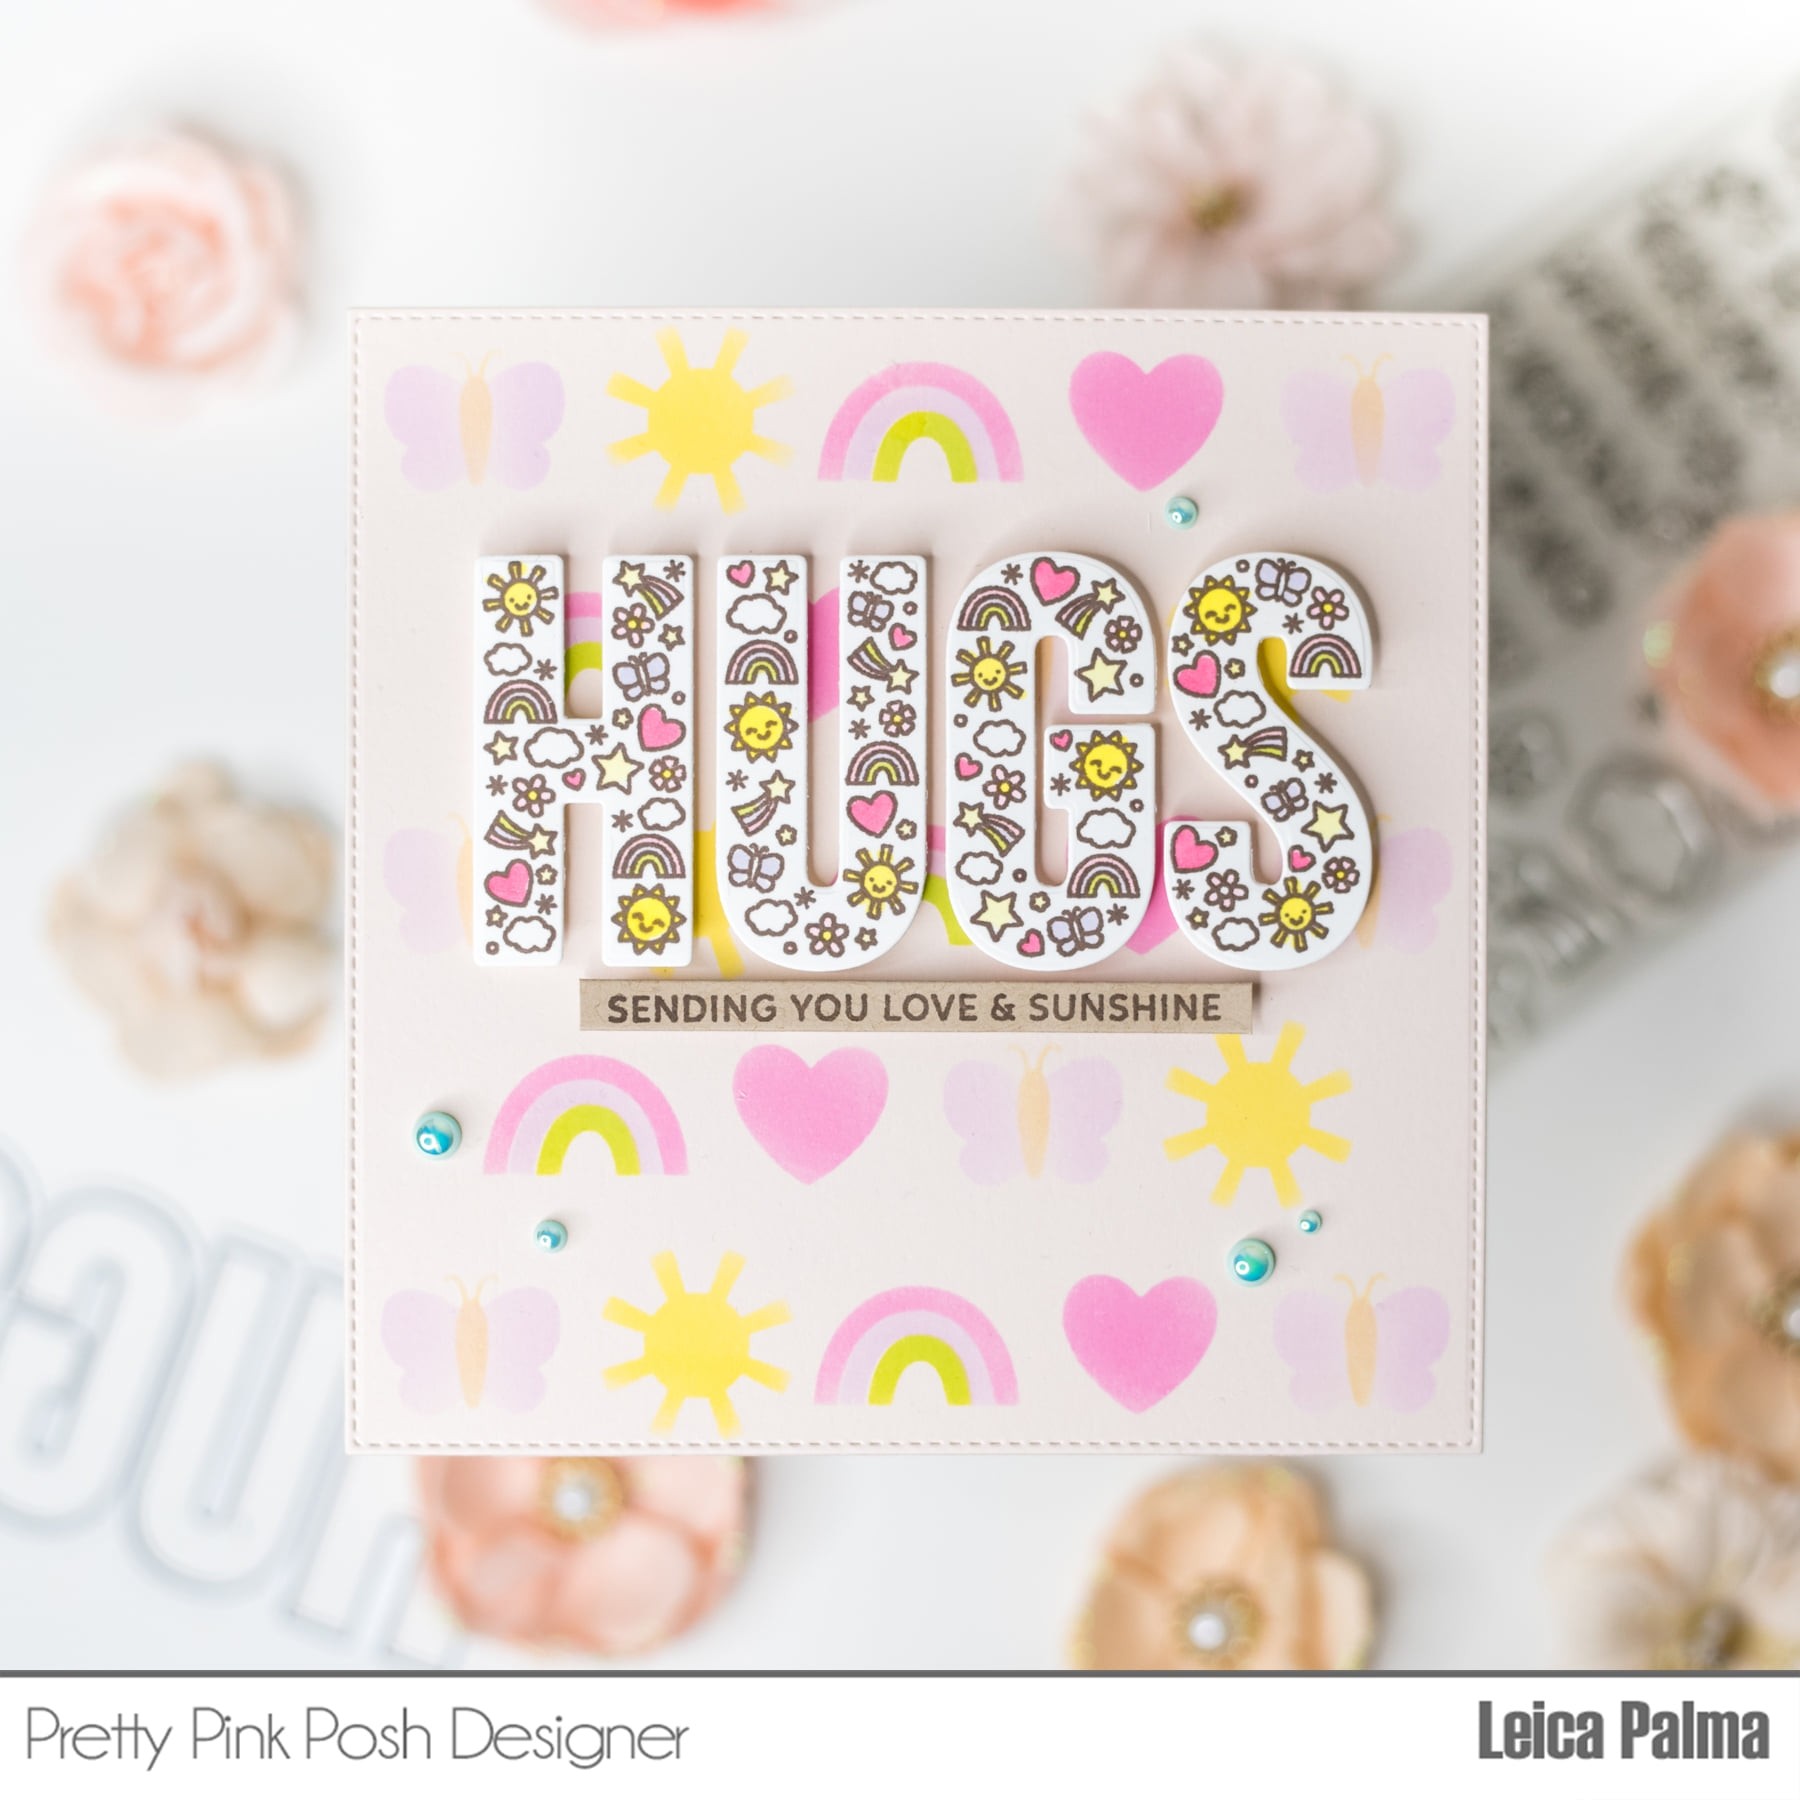 Pretty Pink Posh Hugs stamp set